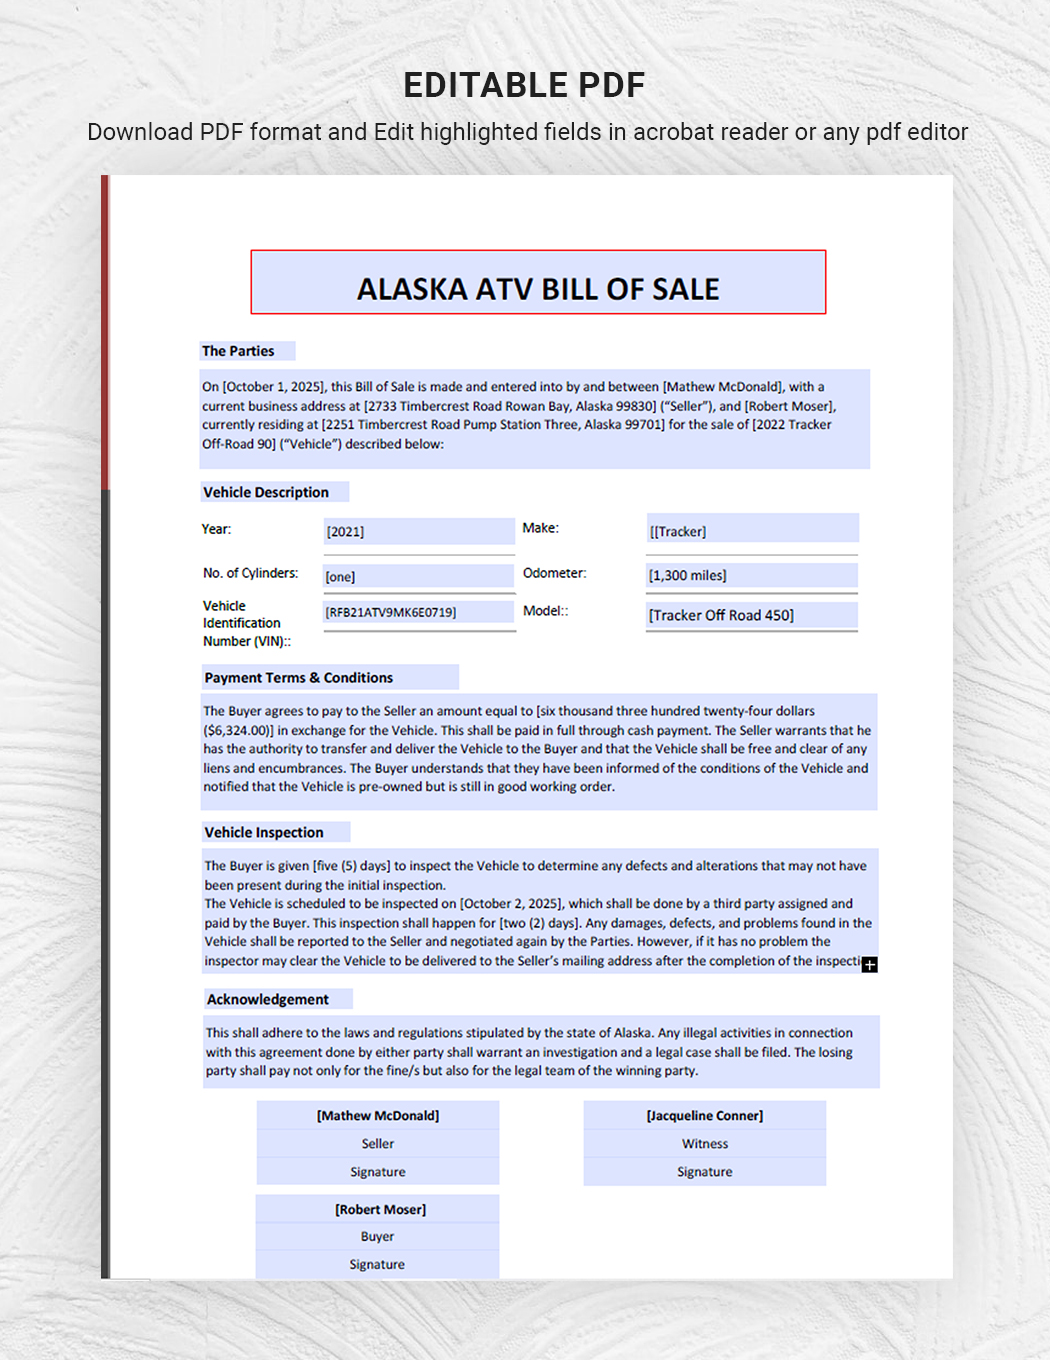 Alaska ATV Bill of Sale Template